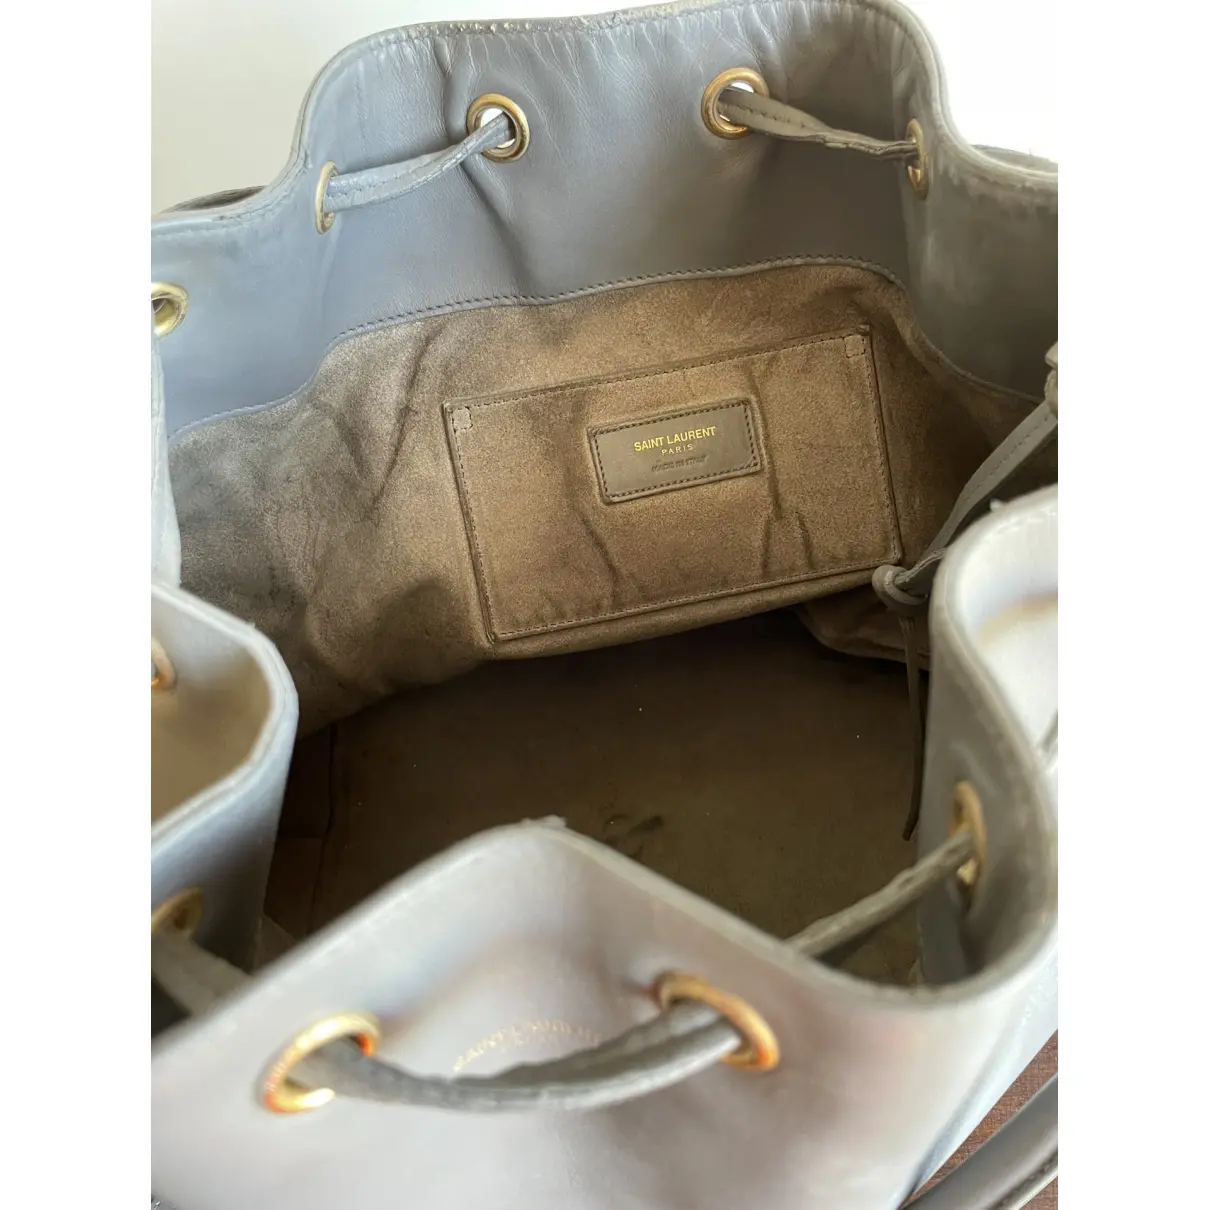 Emmanuelle leather handbag Saint Laurent